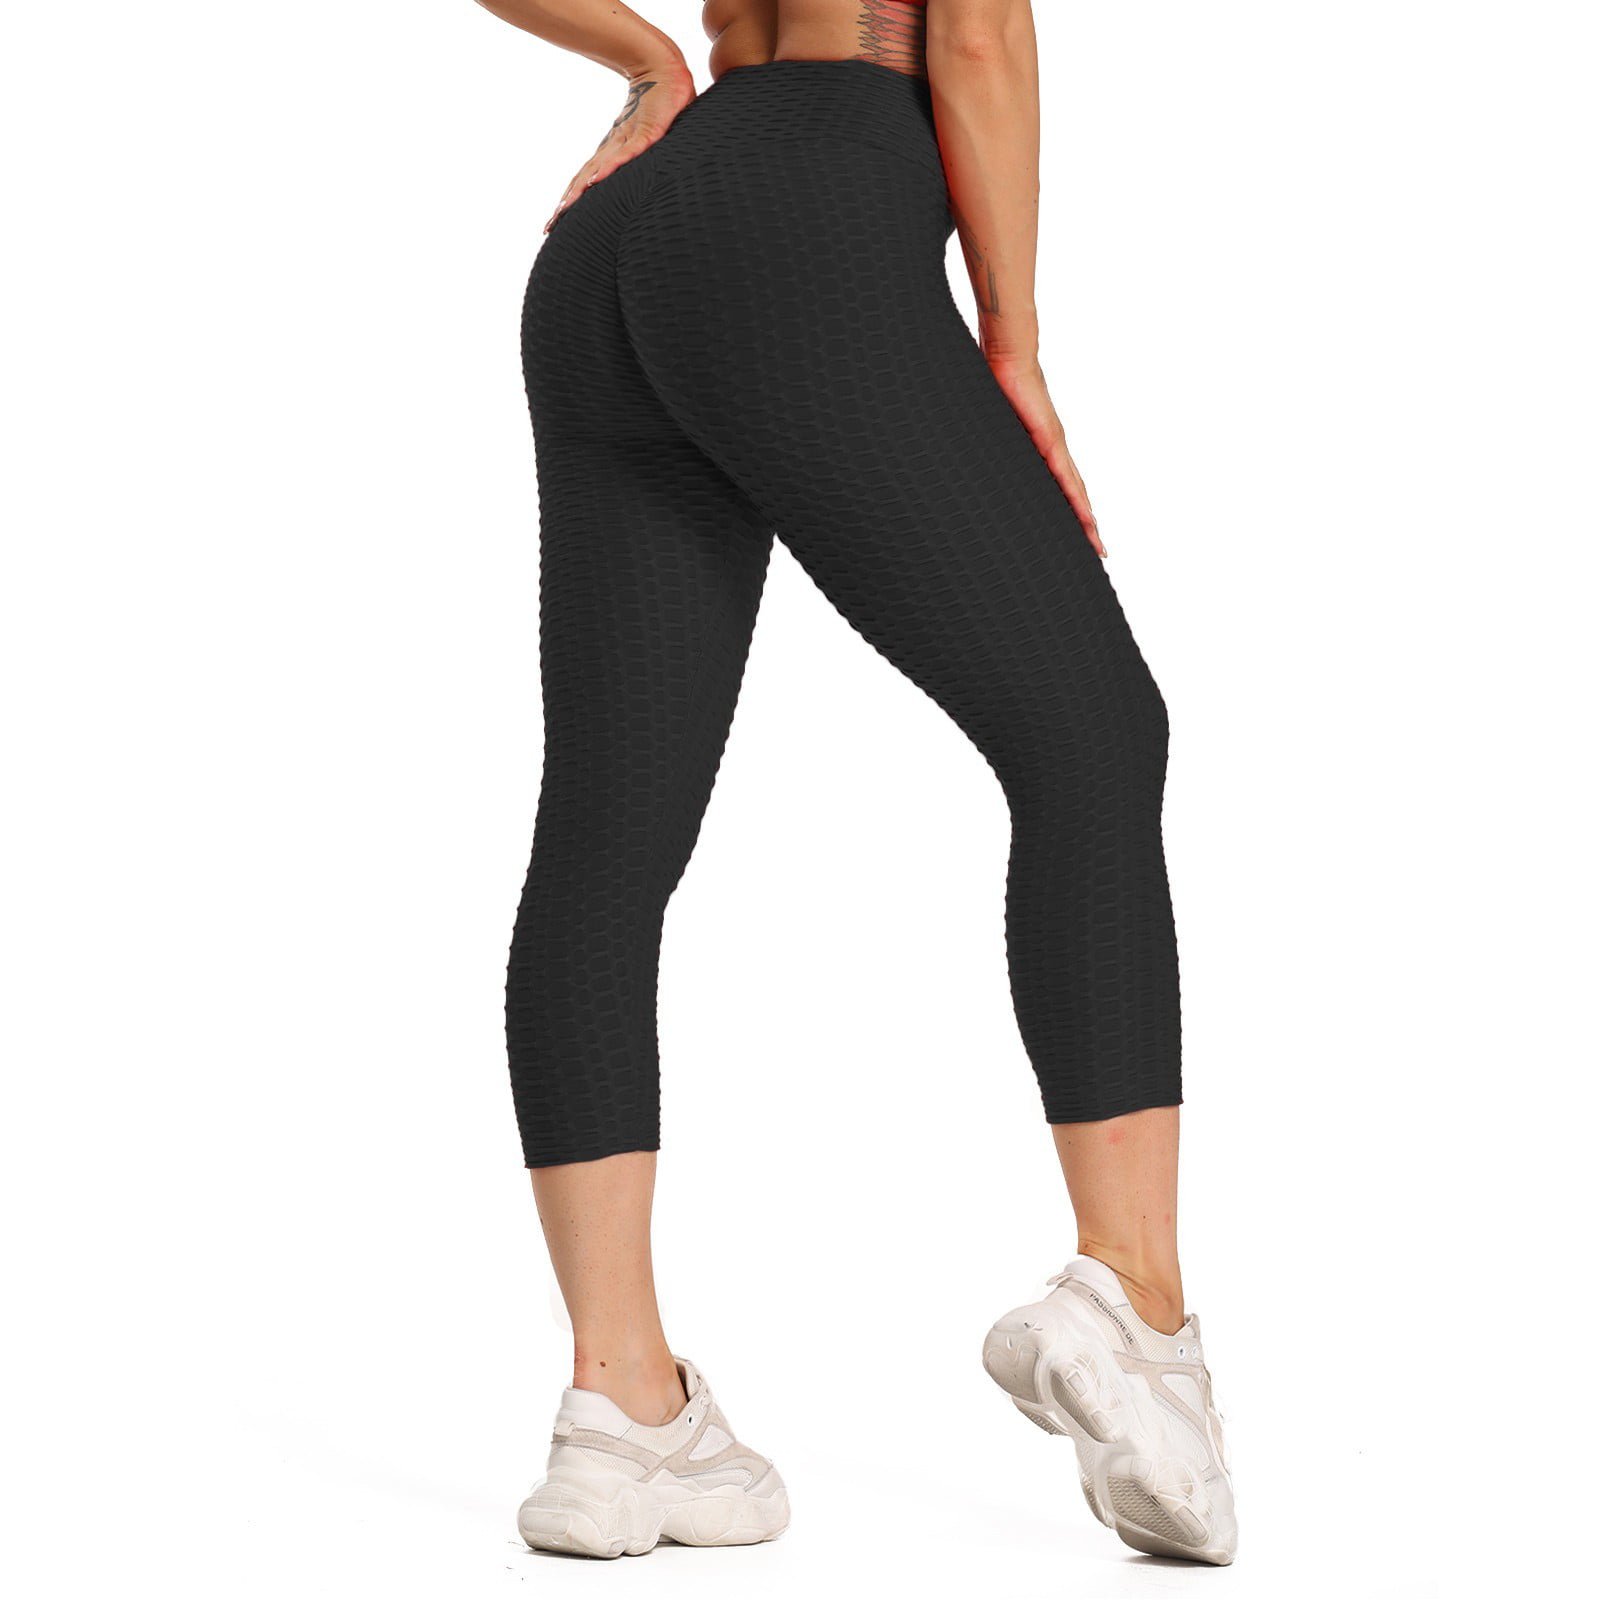 GzxtLTX Yoga Pants High Waist Printed Workout Leggings Fitness Capris Trouser Athletic Pants 